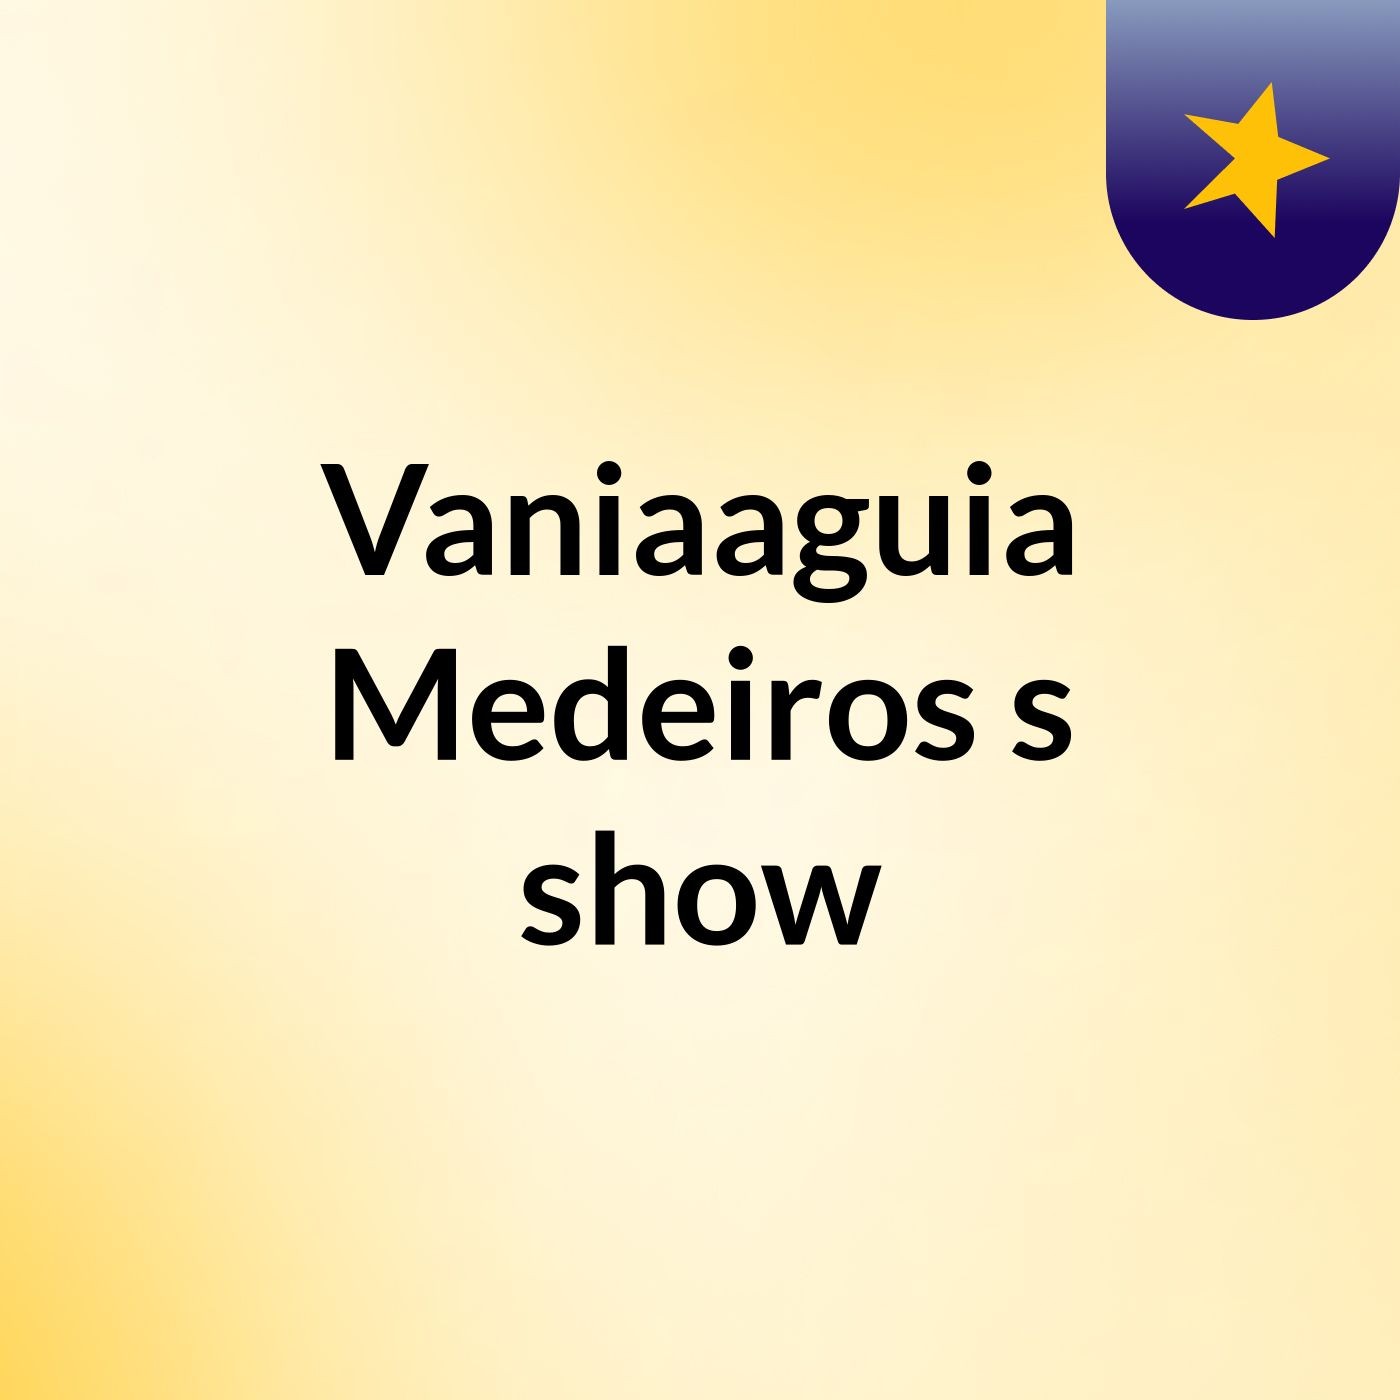 Vaniaaguia Medeiros's show